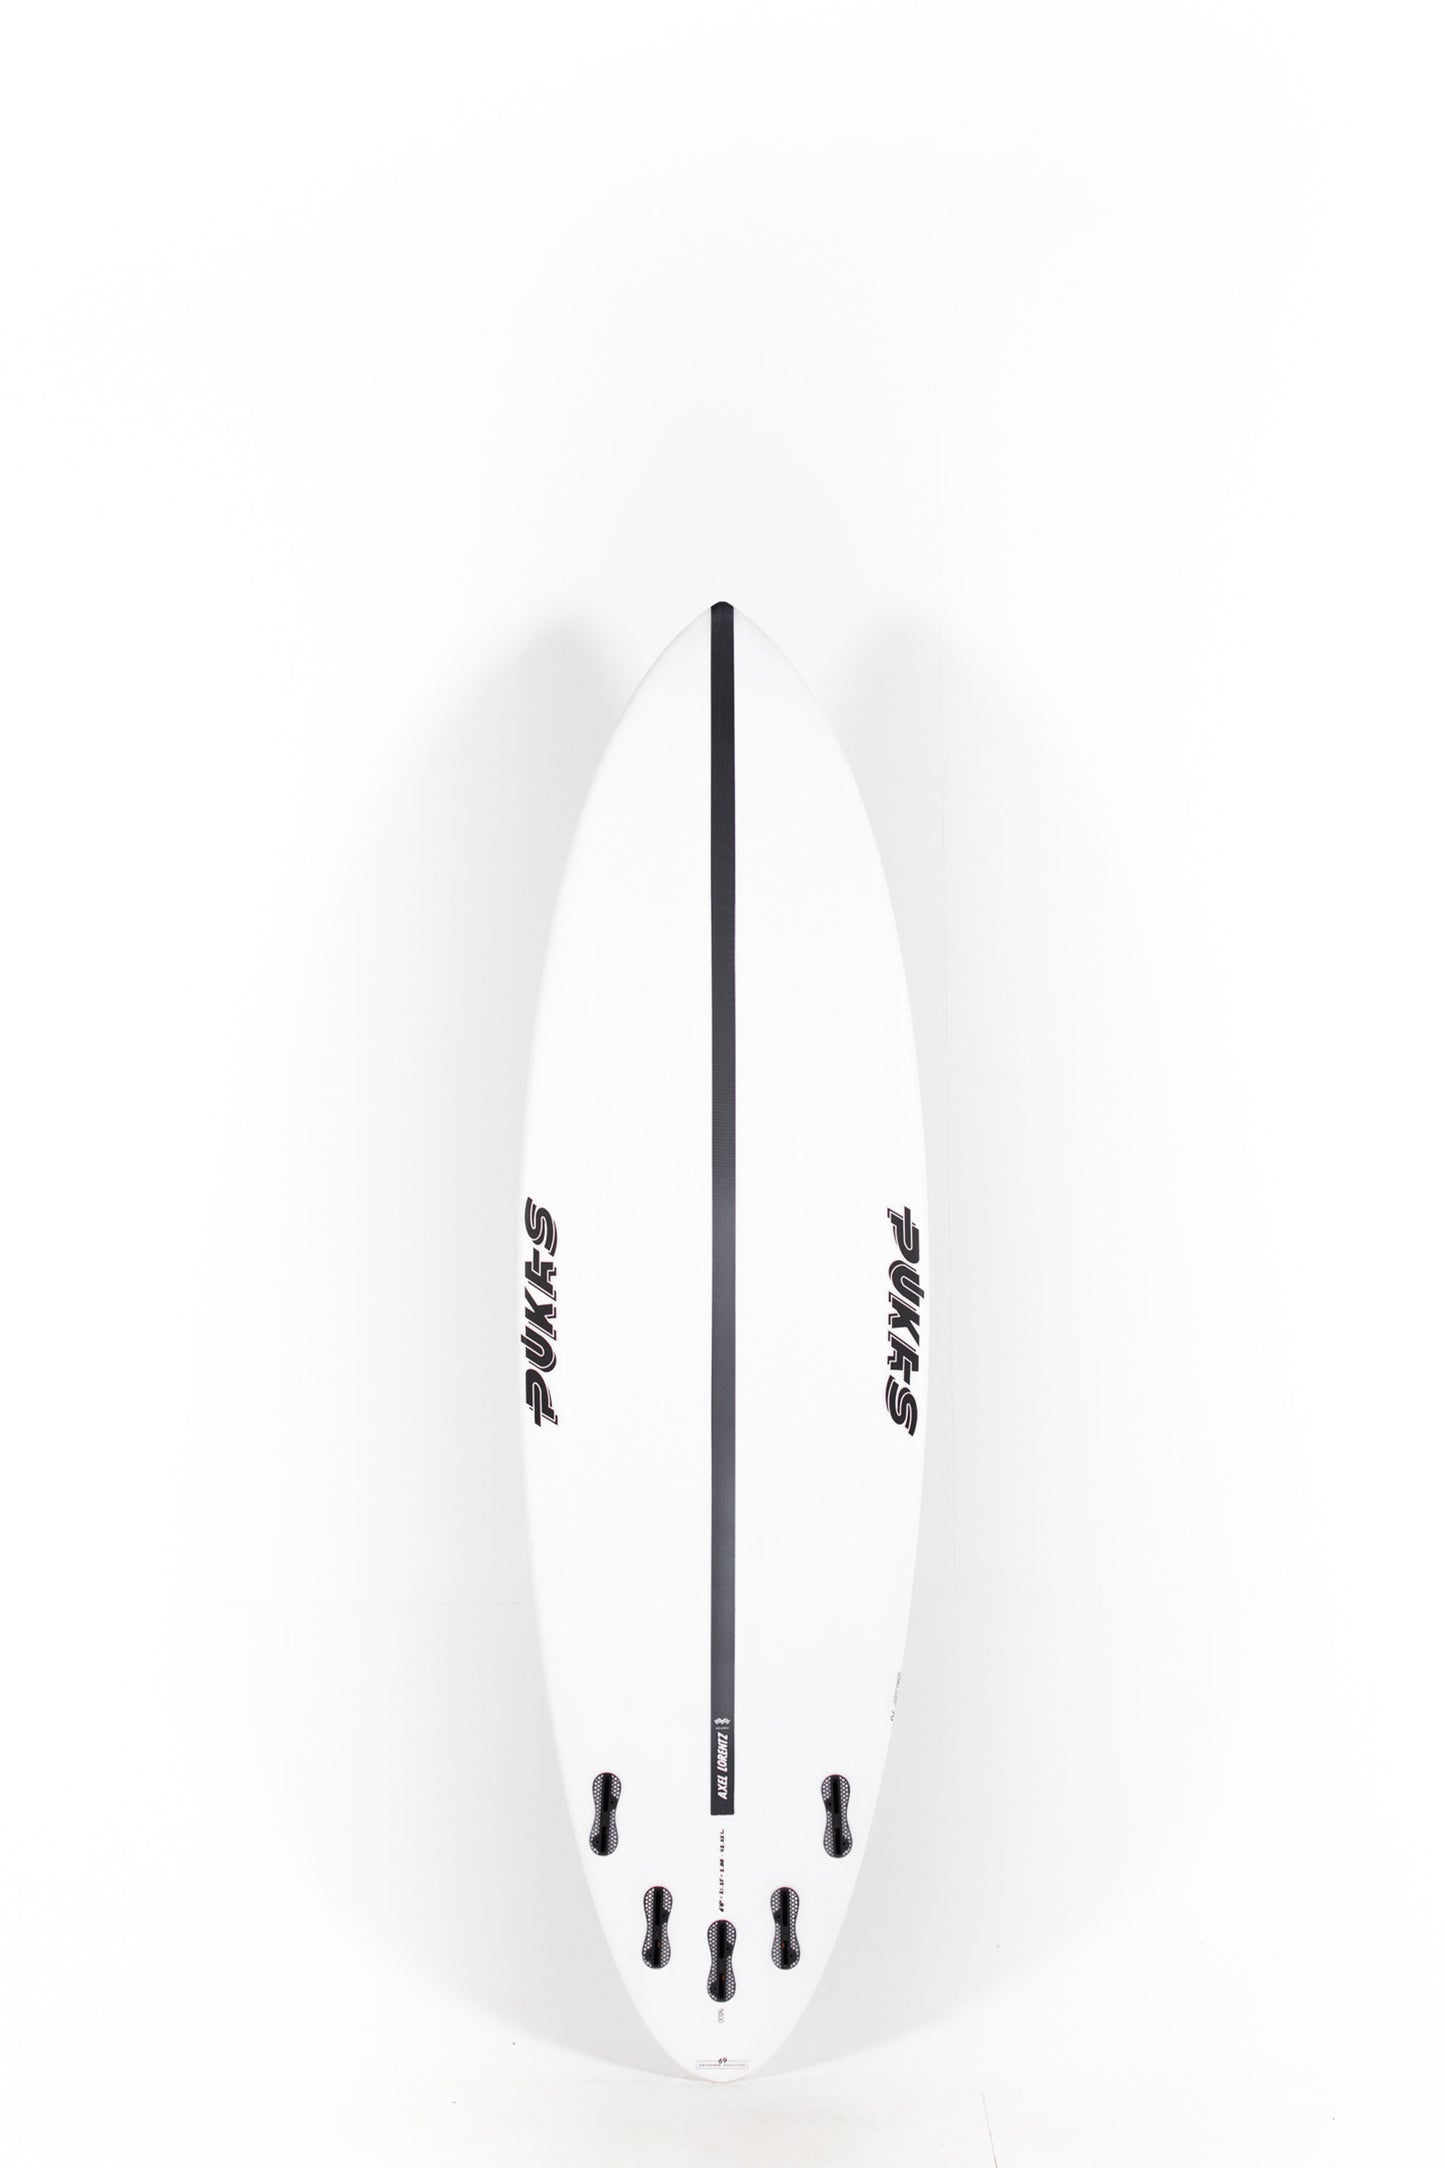 Pukas Surf shop - Pukas Surfboard - INN·CA Tec - 69ER EVOLUTION by Axel Lorentz- 6'6" x 21.25" x 2.88" x 42.22L